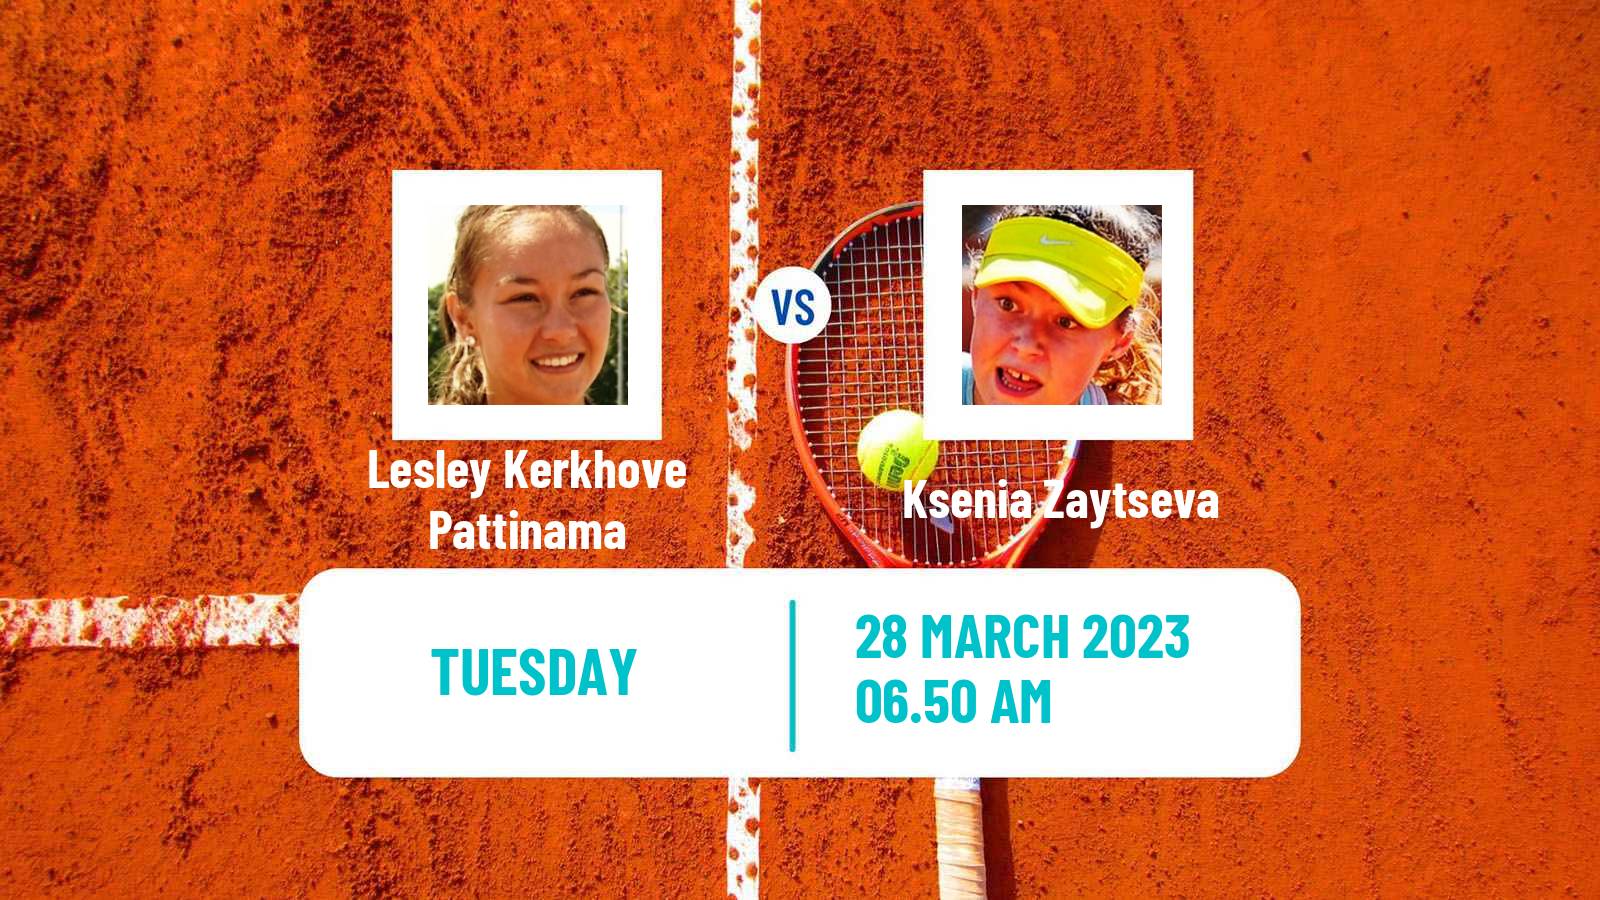 Tennis ITF Tournaments Lesley Kerkhove Pattinama - Ksenia Zaytseva